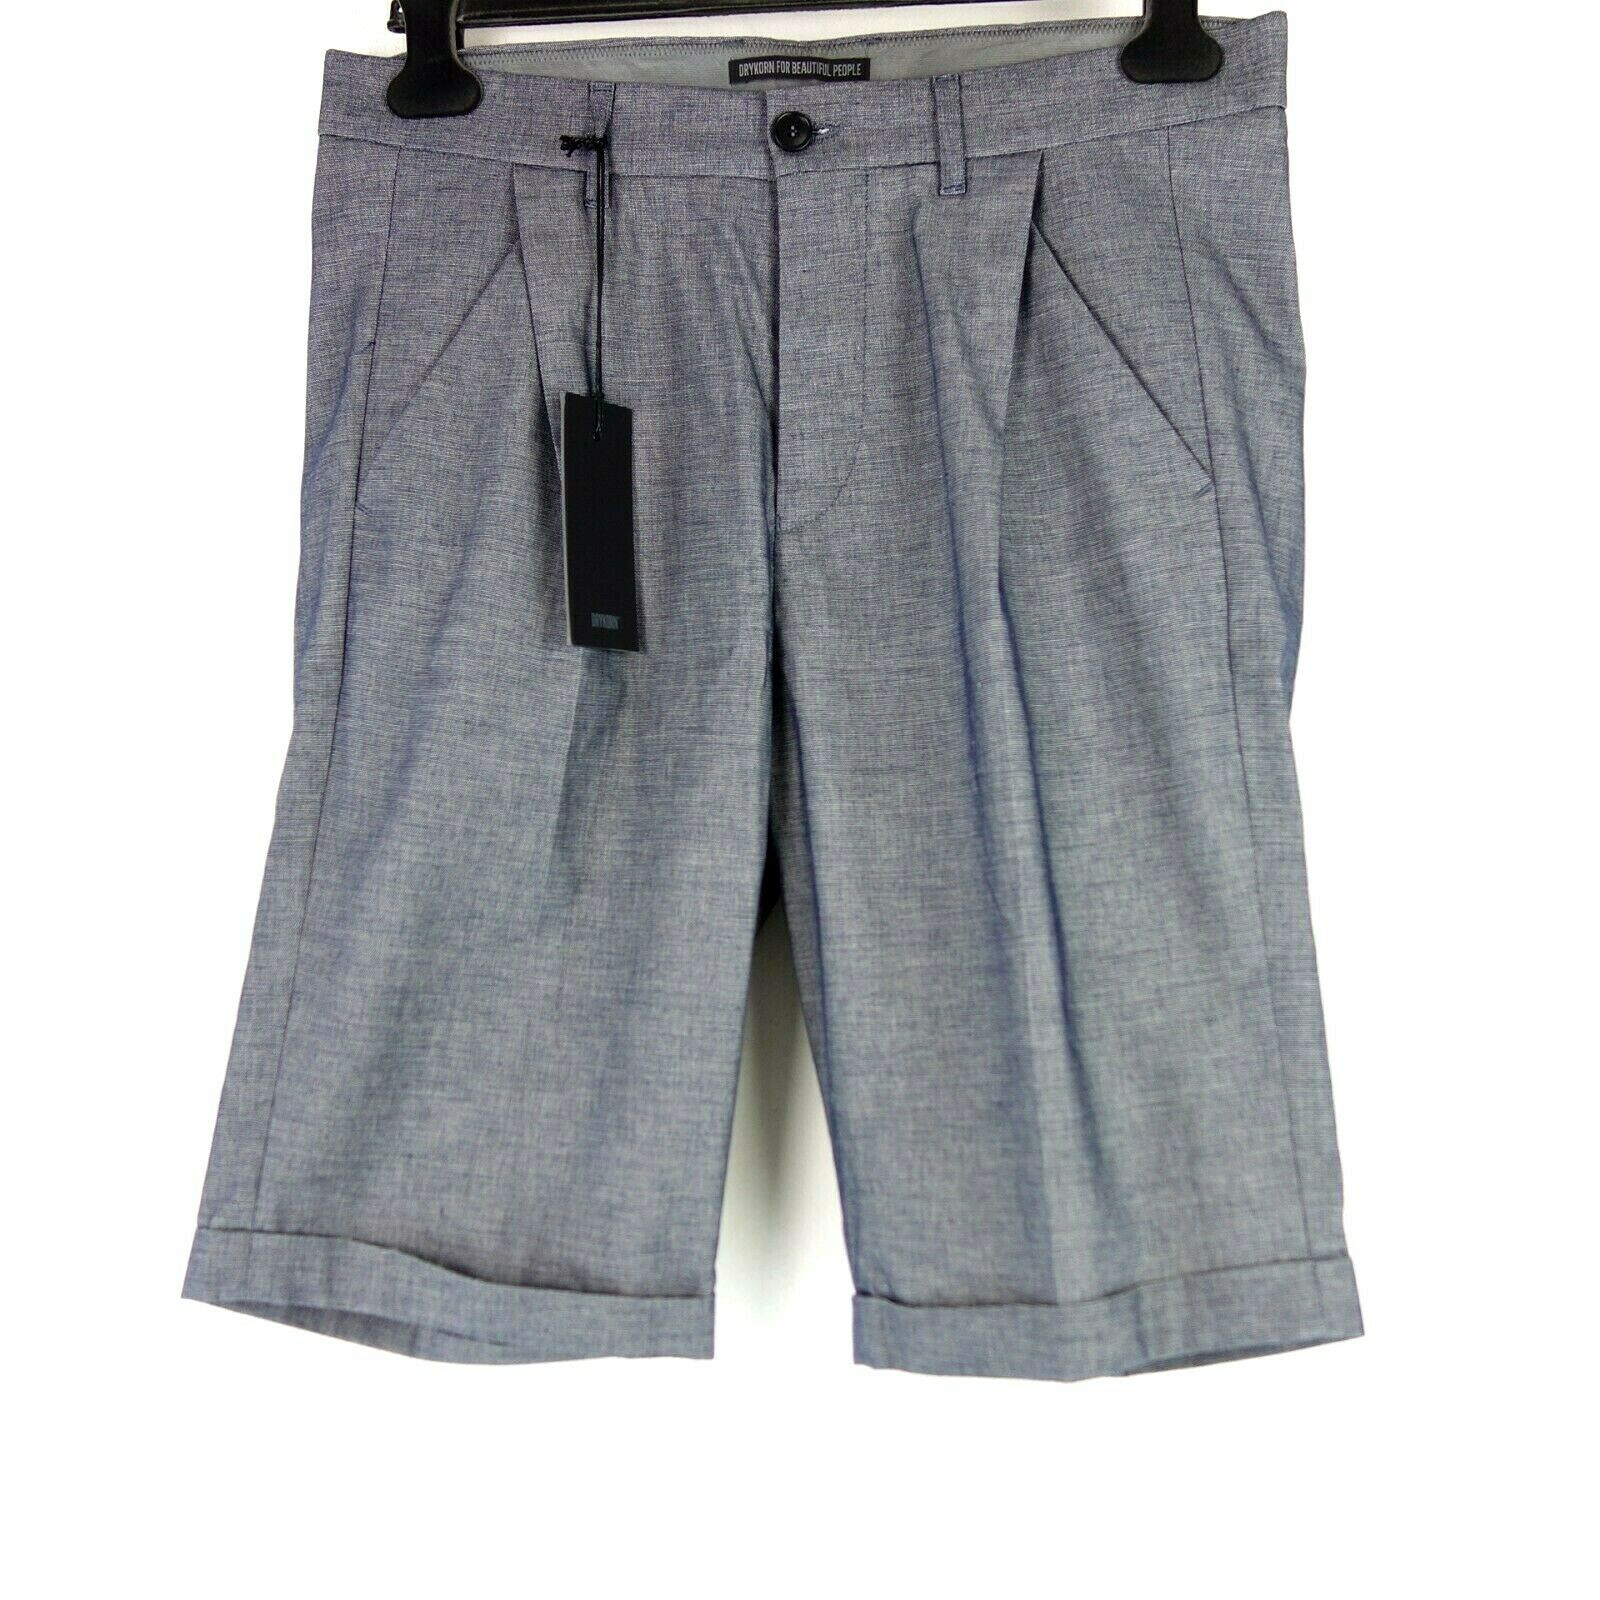 Drykorn Herren Kurze Hose Shorts Stoffhose Chino Modell Fired Blau Np 120 Neu - 34